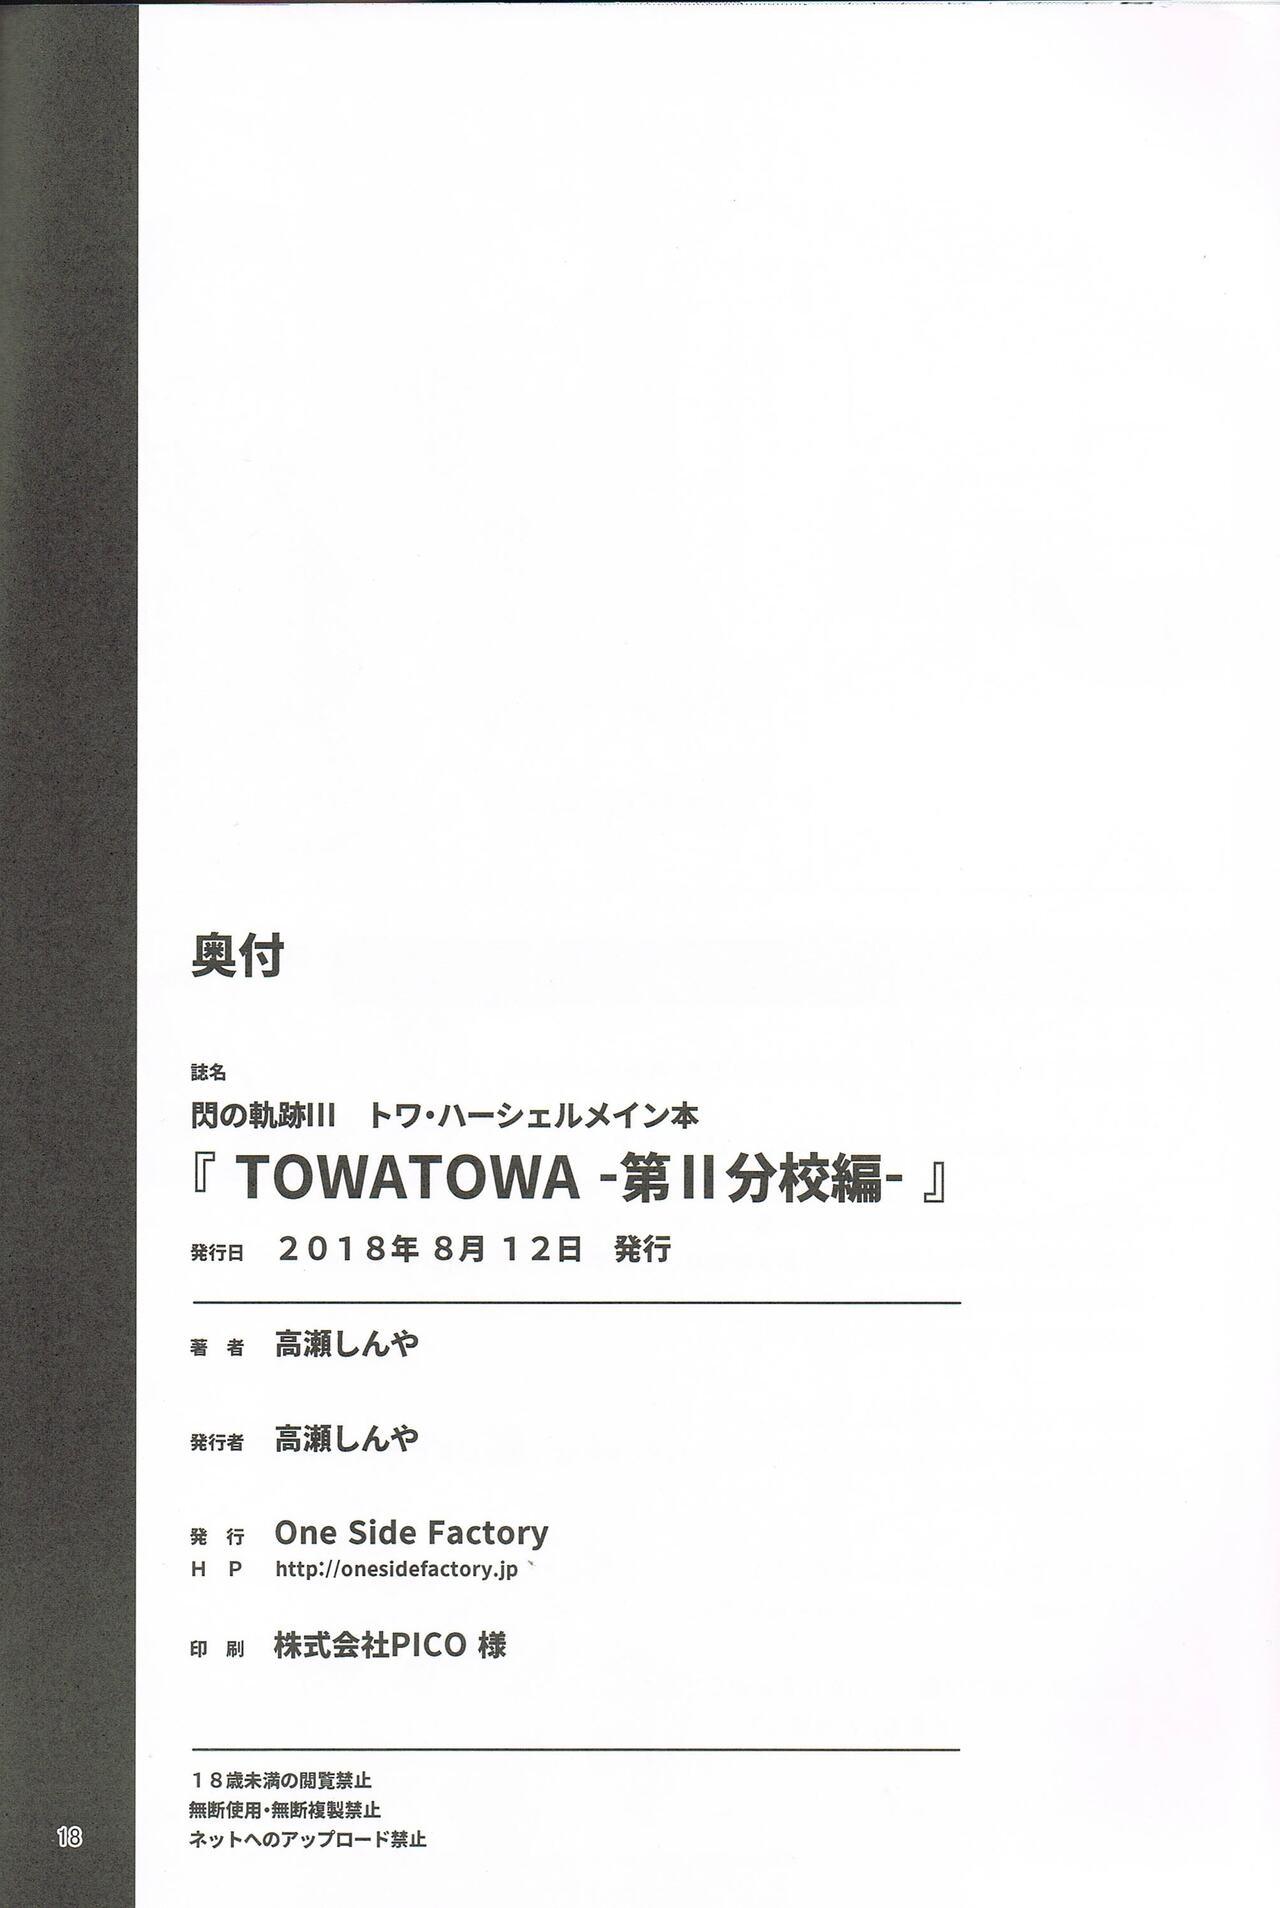 TOWATOWA 16